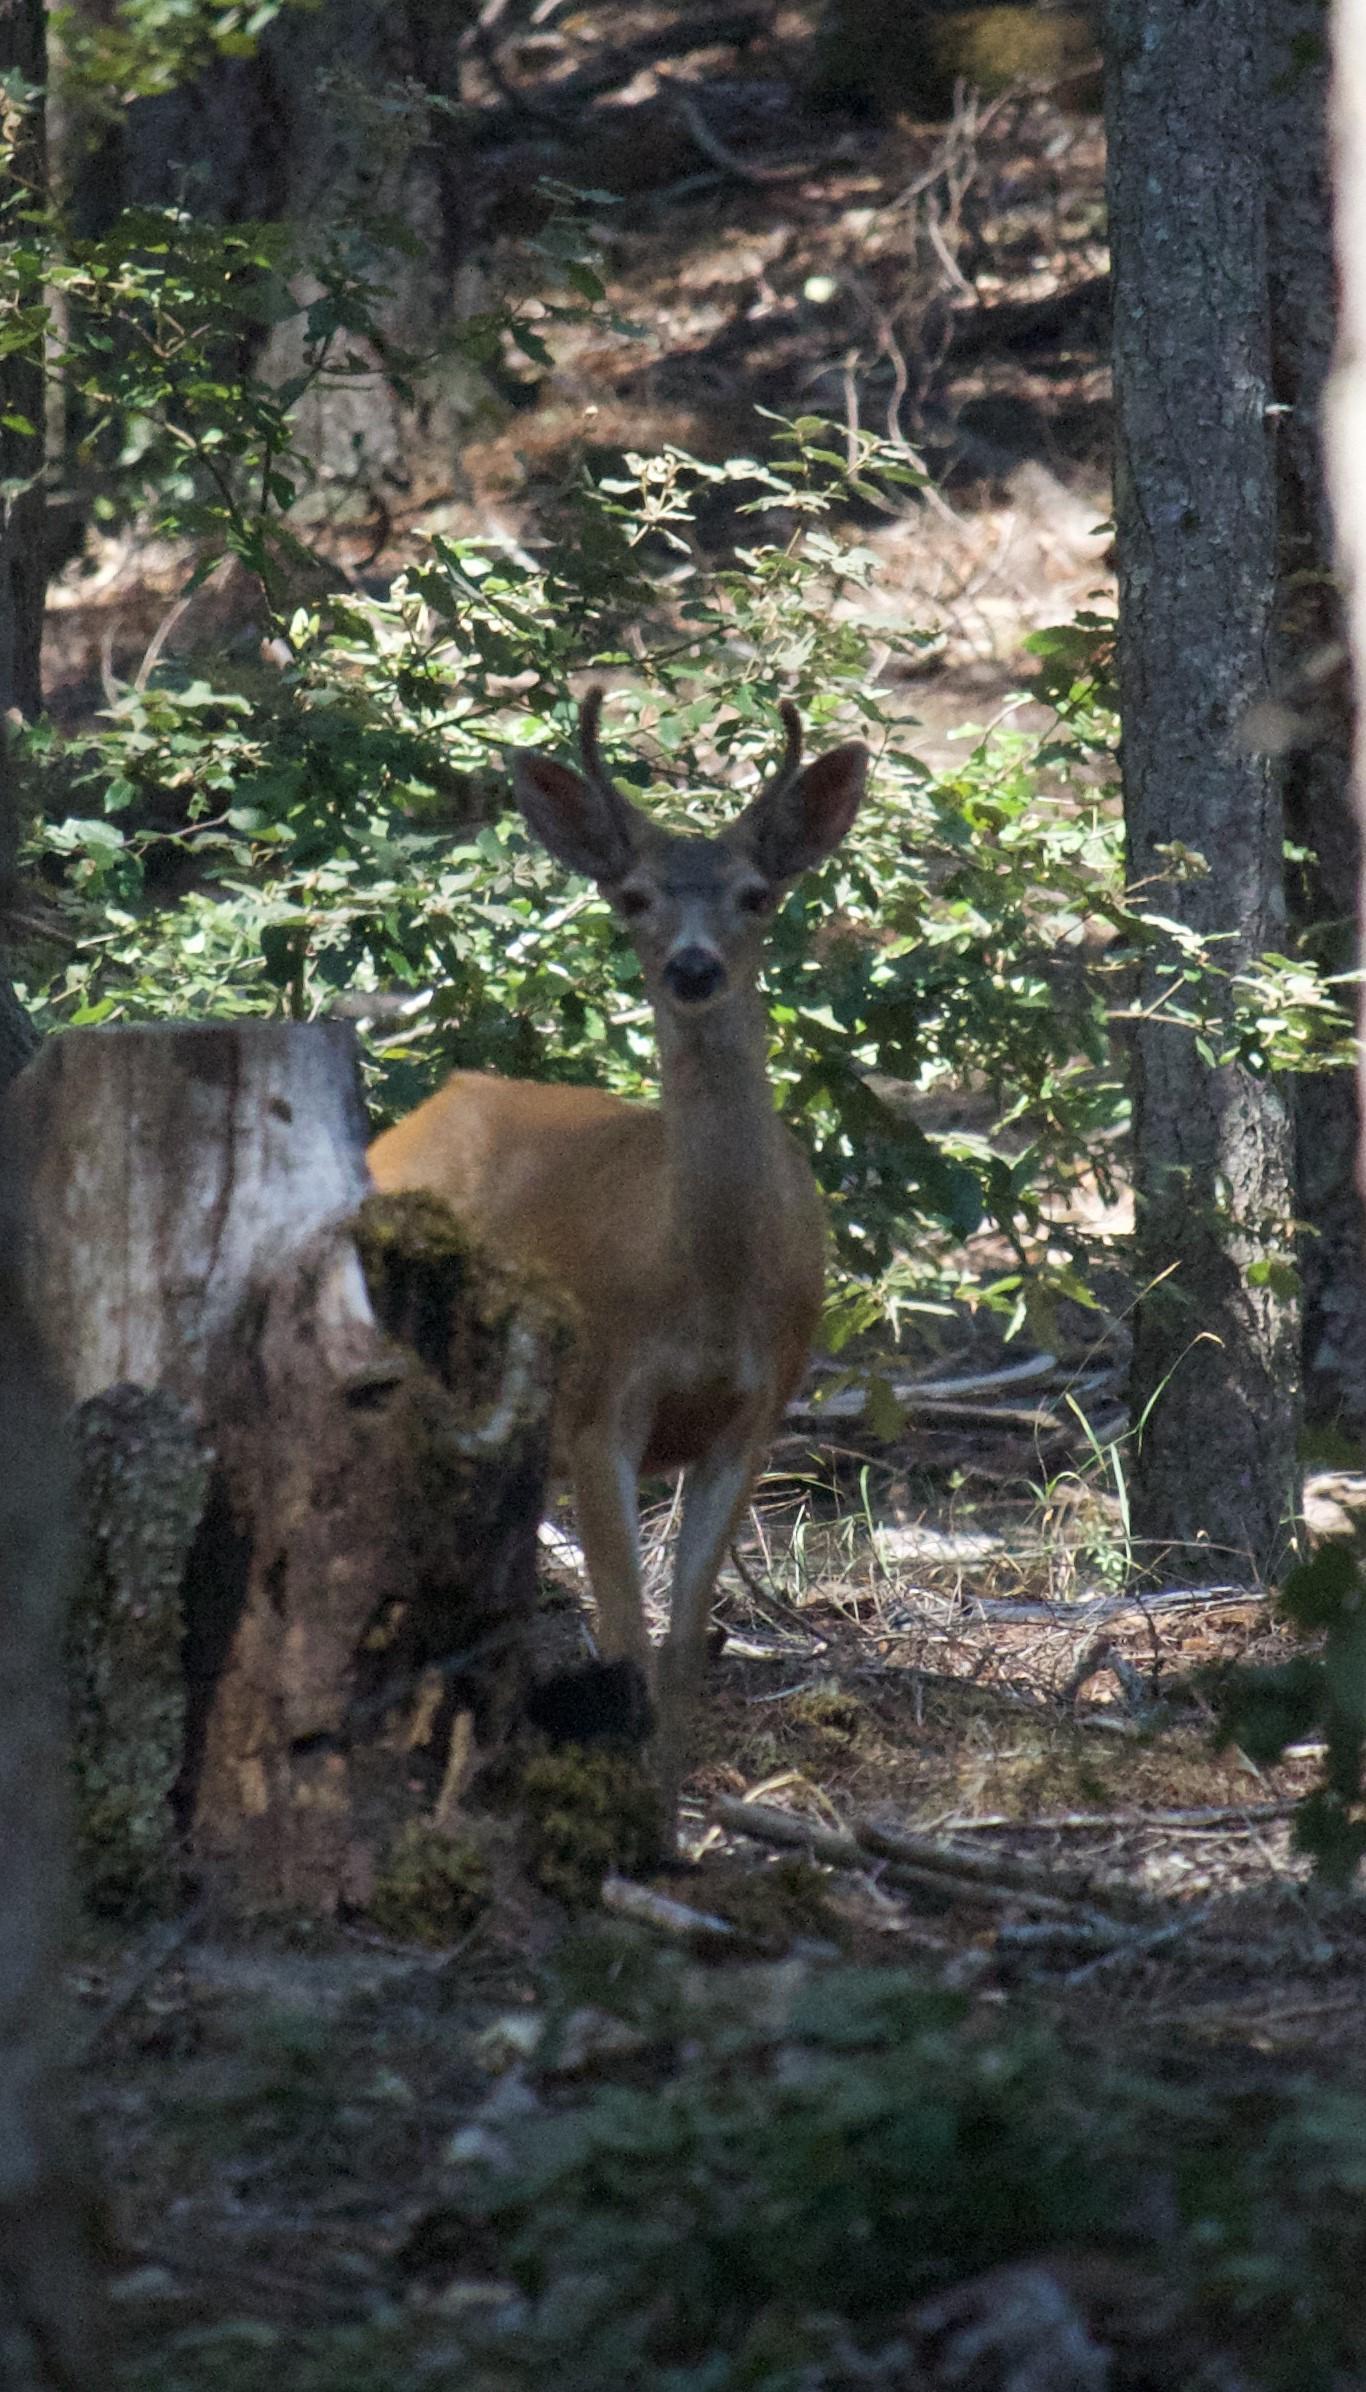 A buck with velvet-covered horns hiding among trees